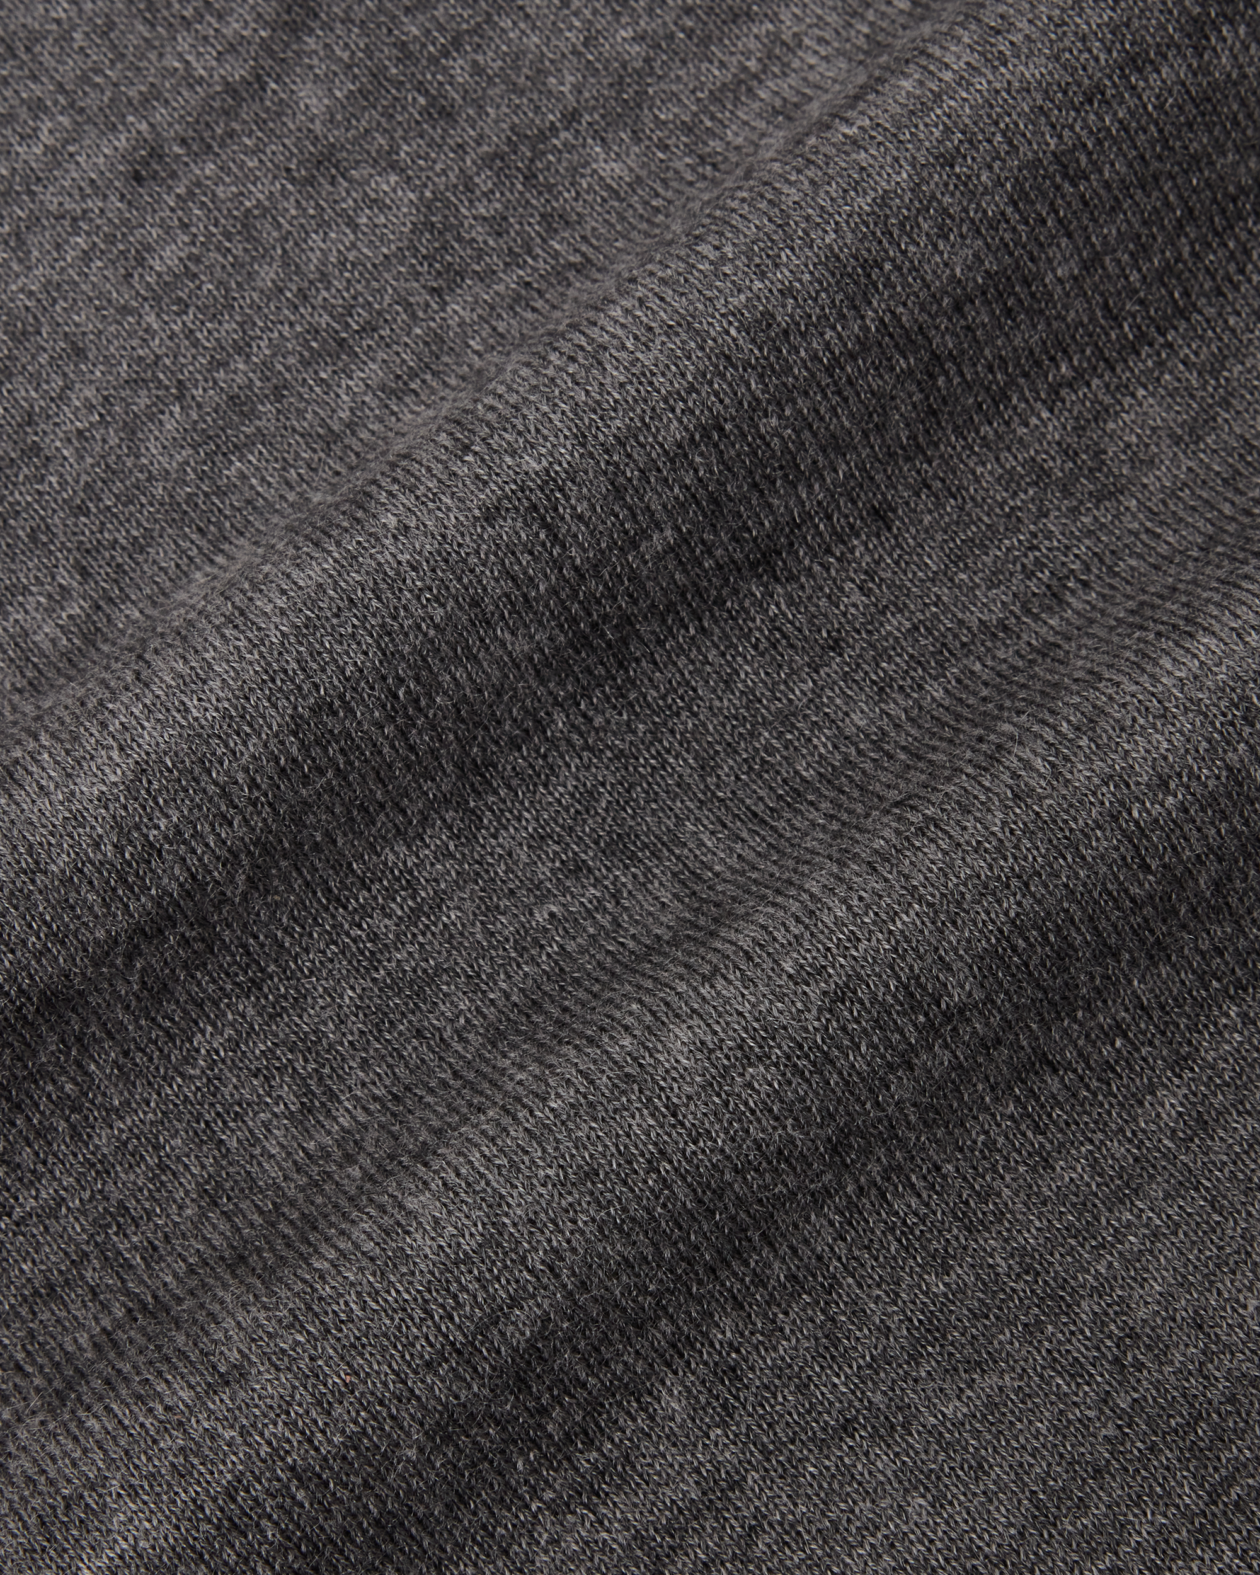 Cashmere Half-Zip Sweater Grey